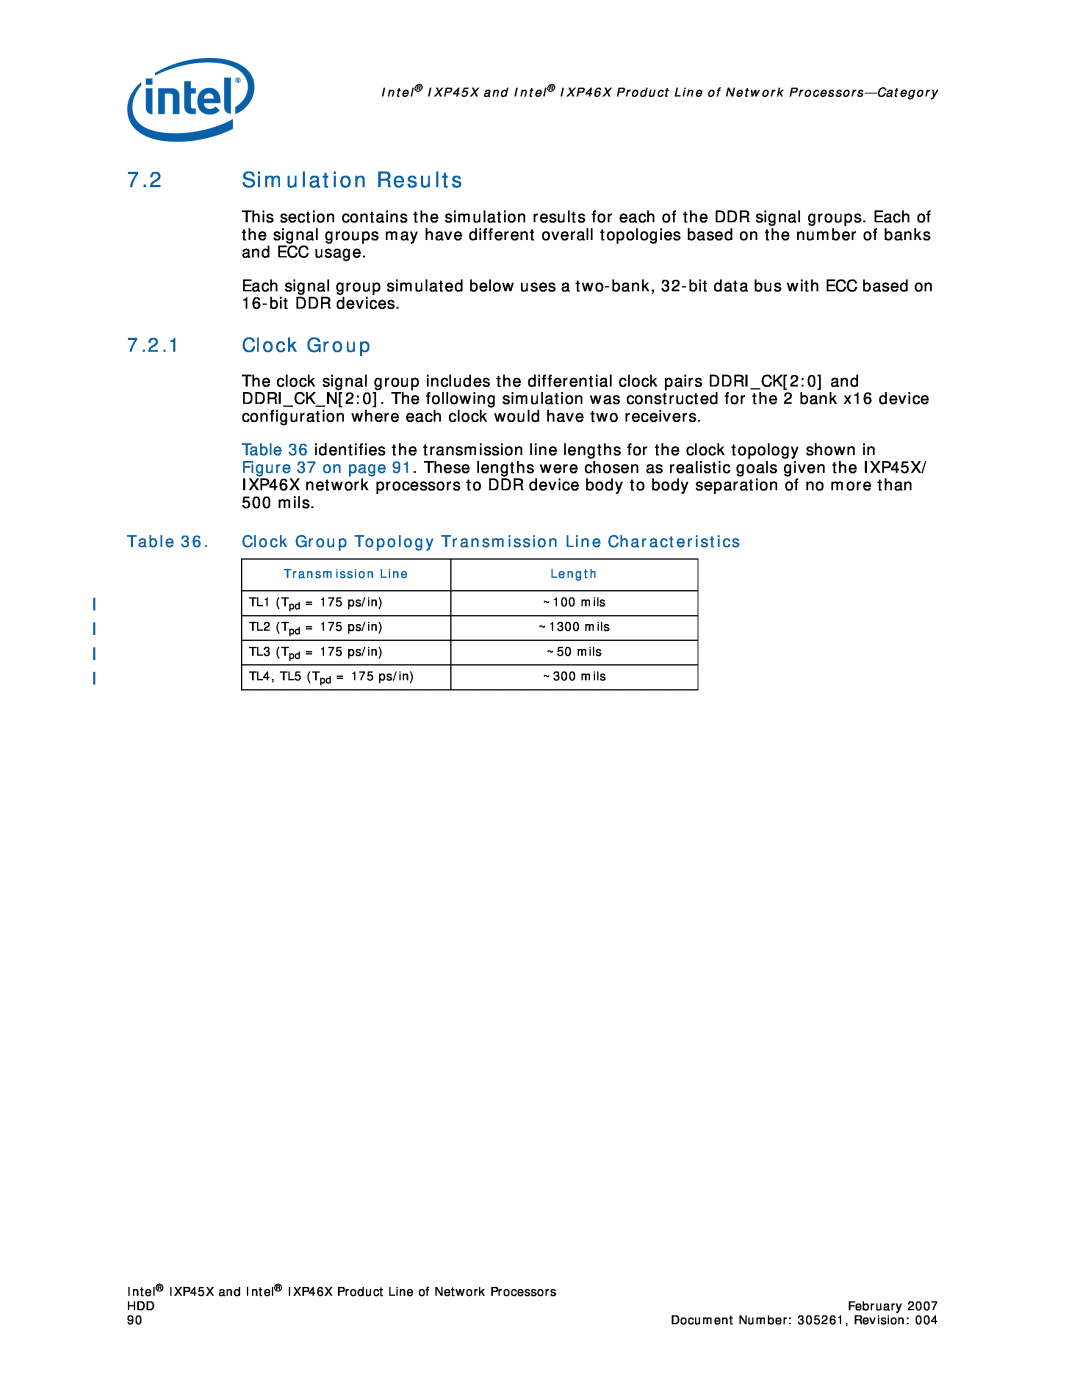 Intel IXP46X, IXP45X manual 7.2Simulation Results, 7.2.1Clock Group 